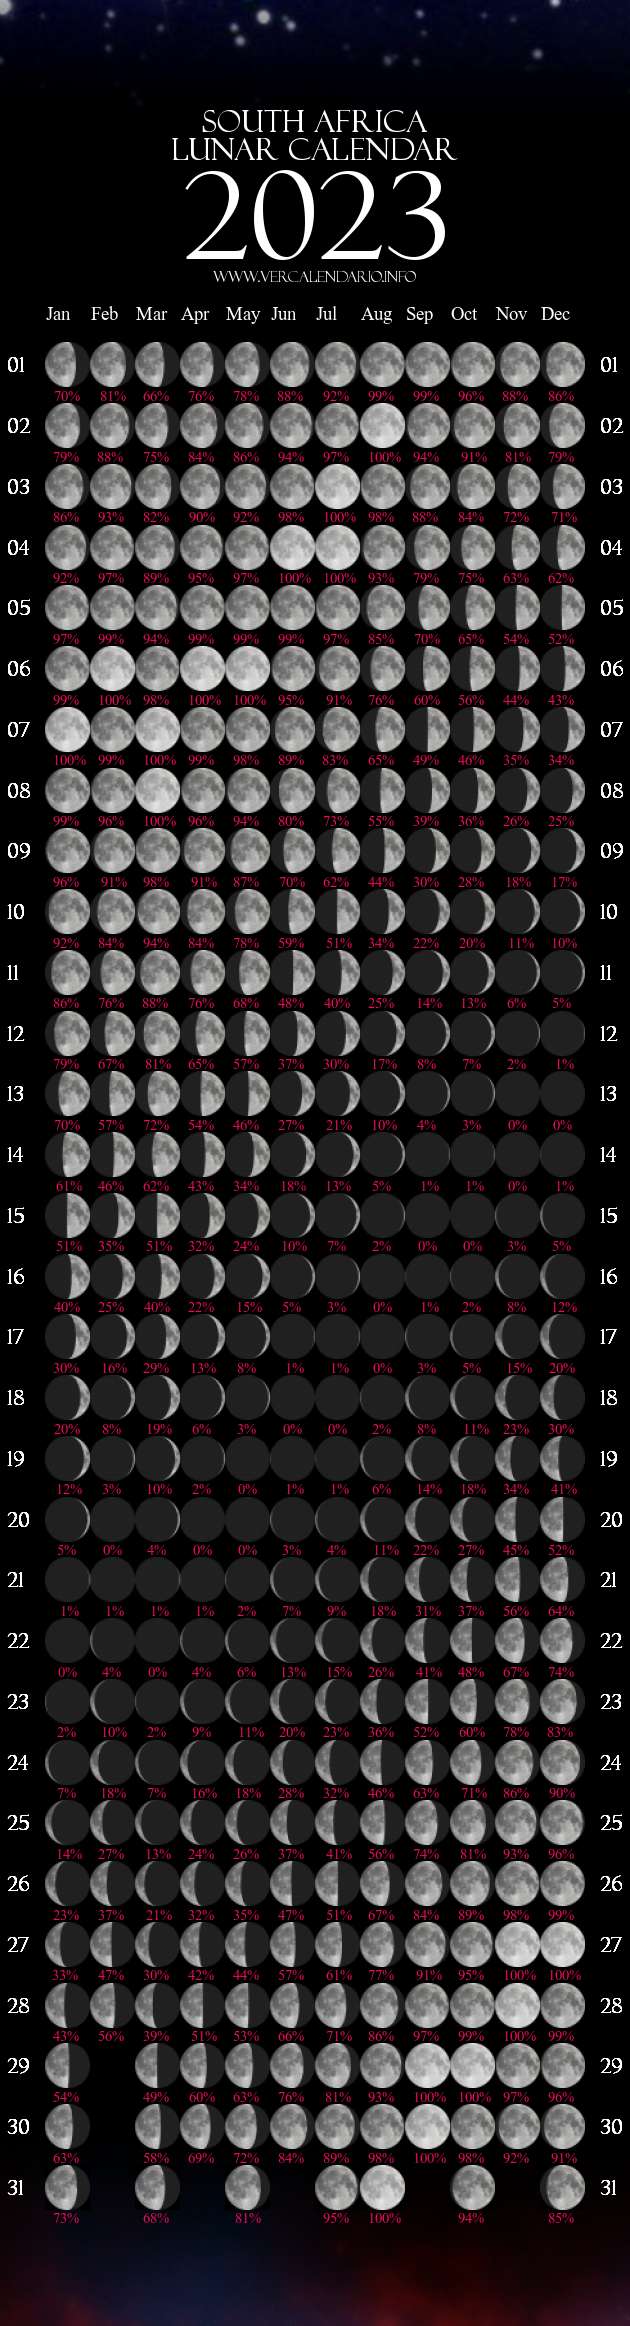 lunar-calendar-2023-south-africa